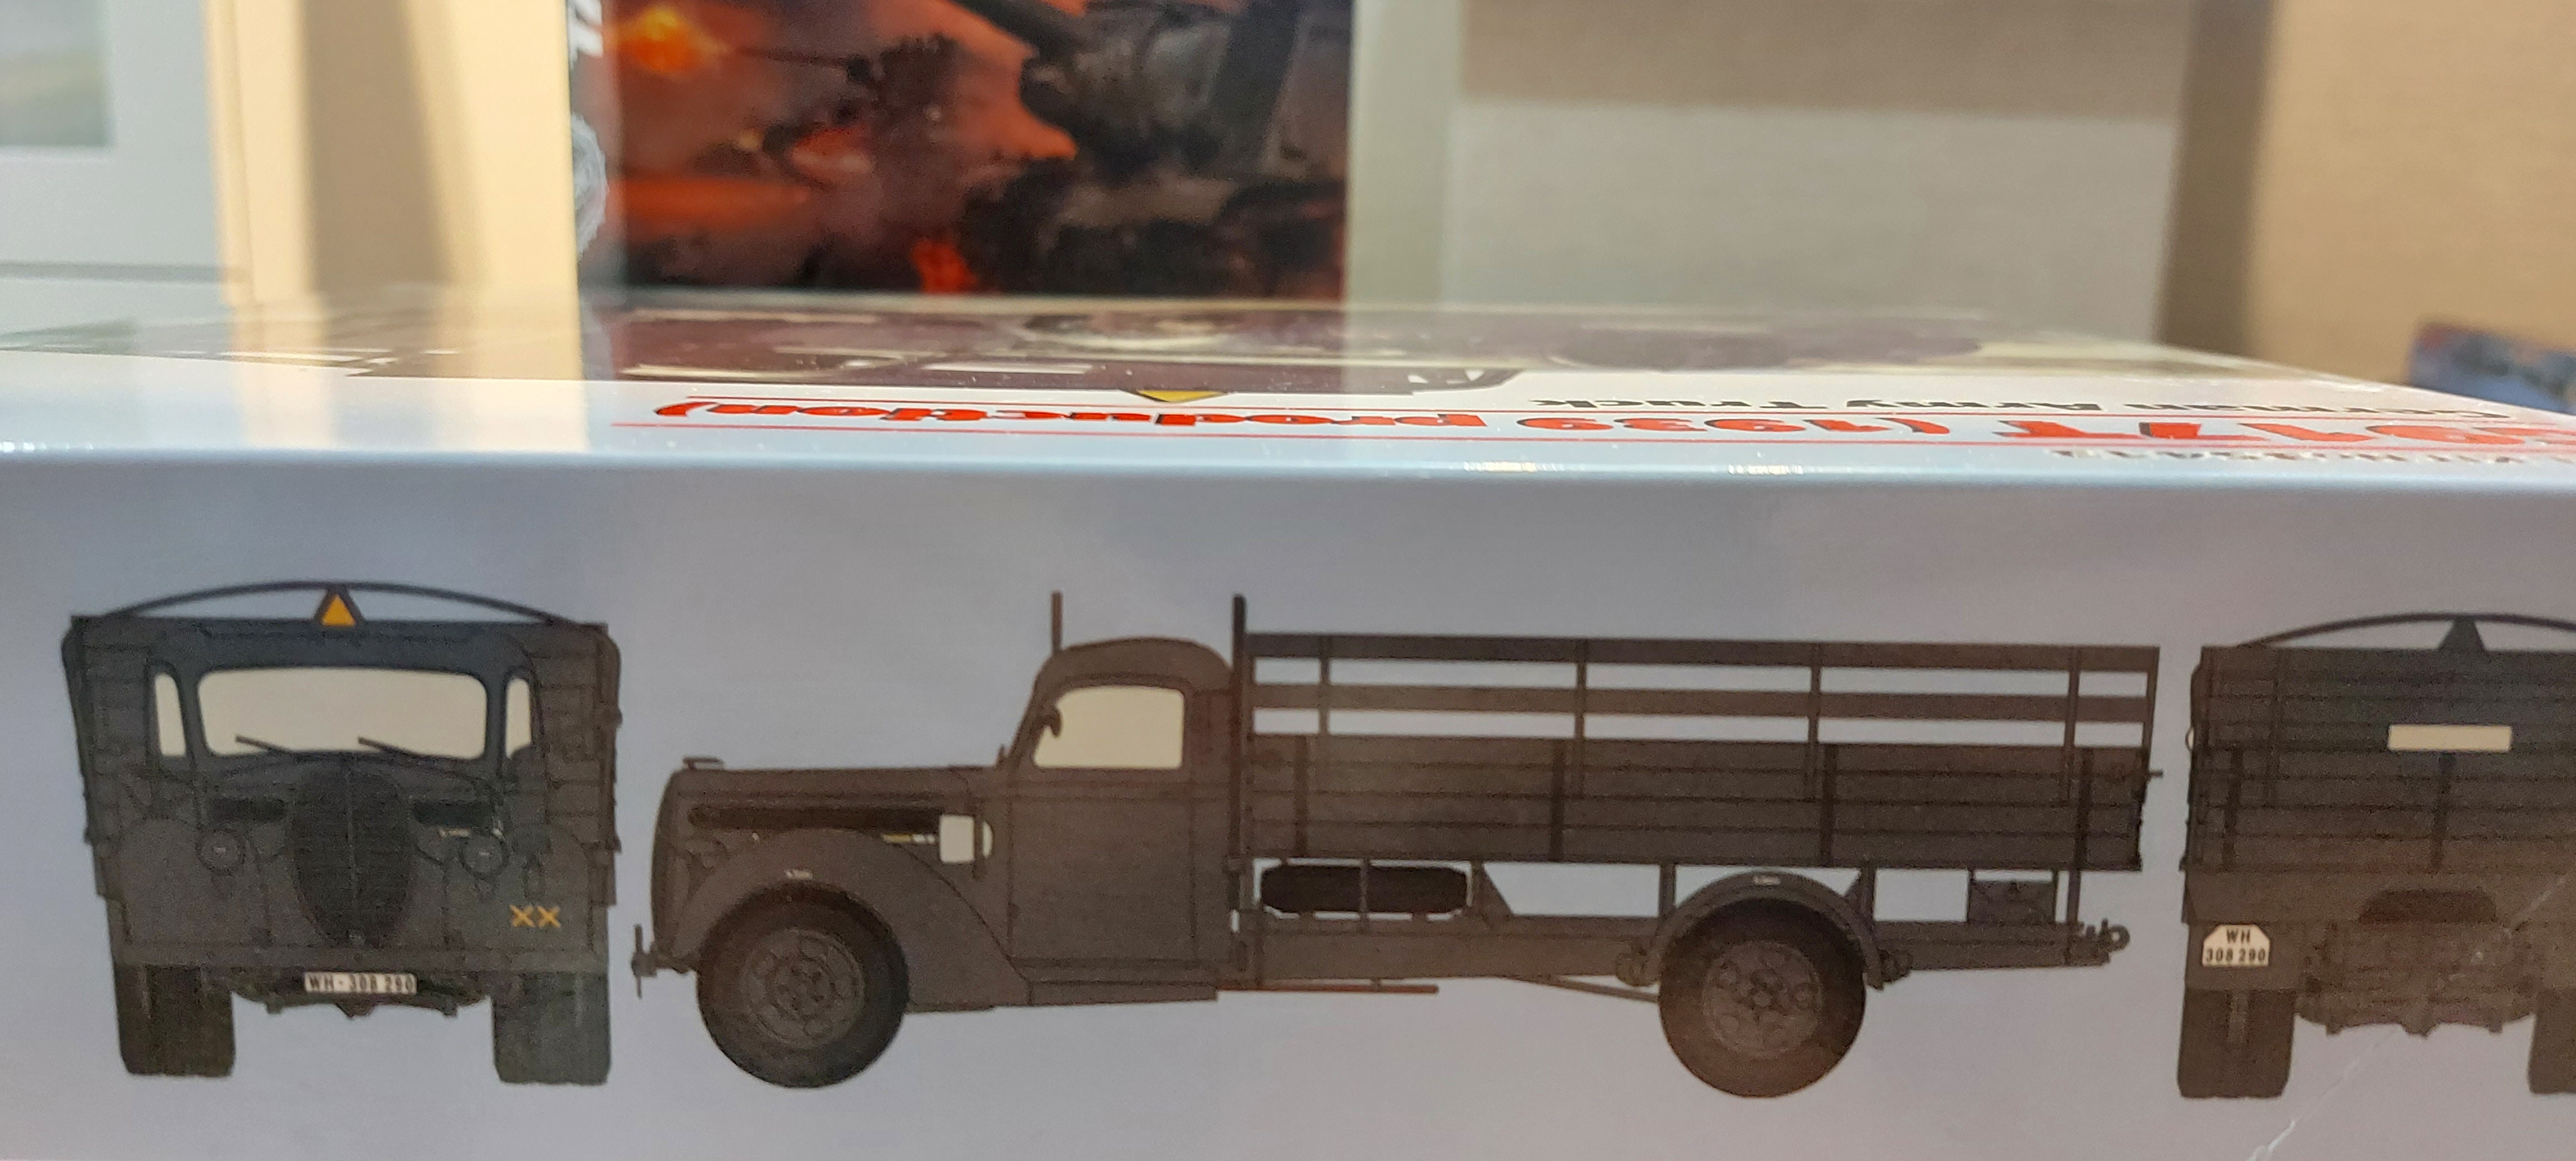 Фото G917T (производства 1939 г.) Германский армейский грузовой автомобиль